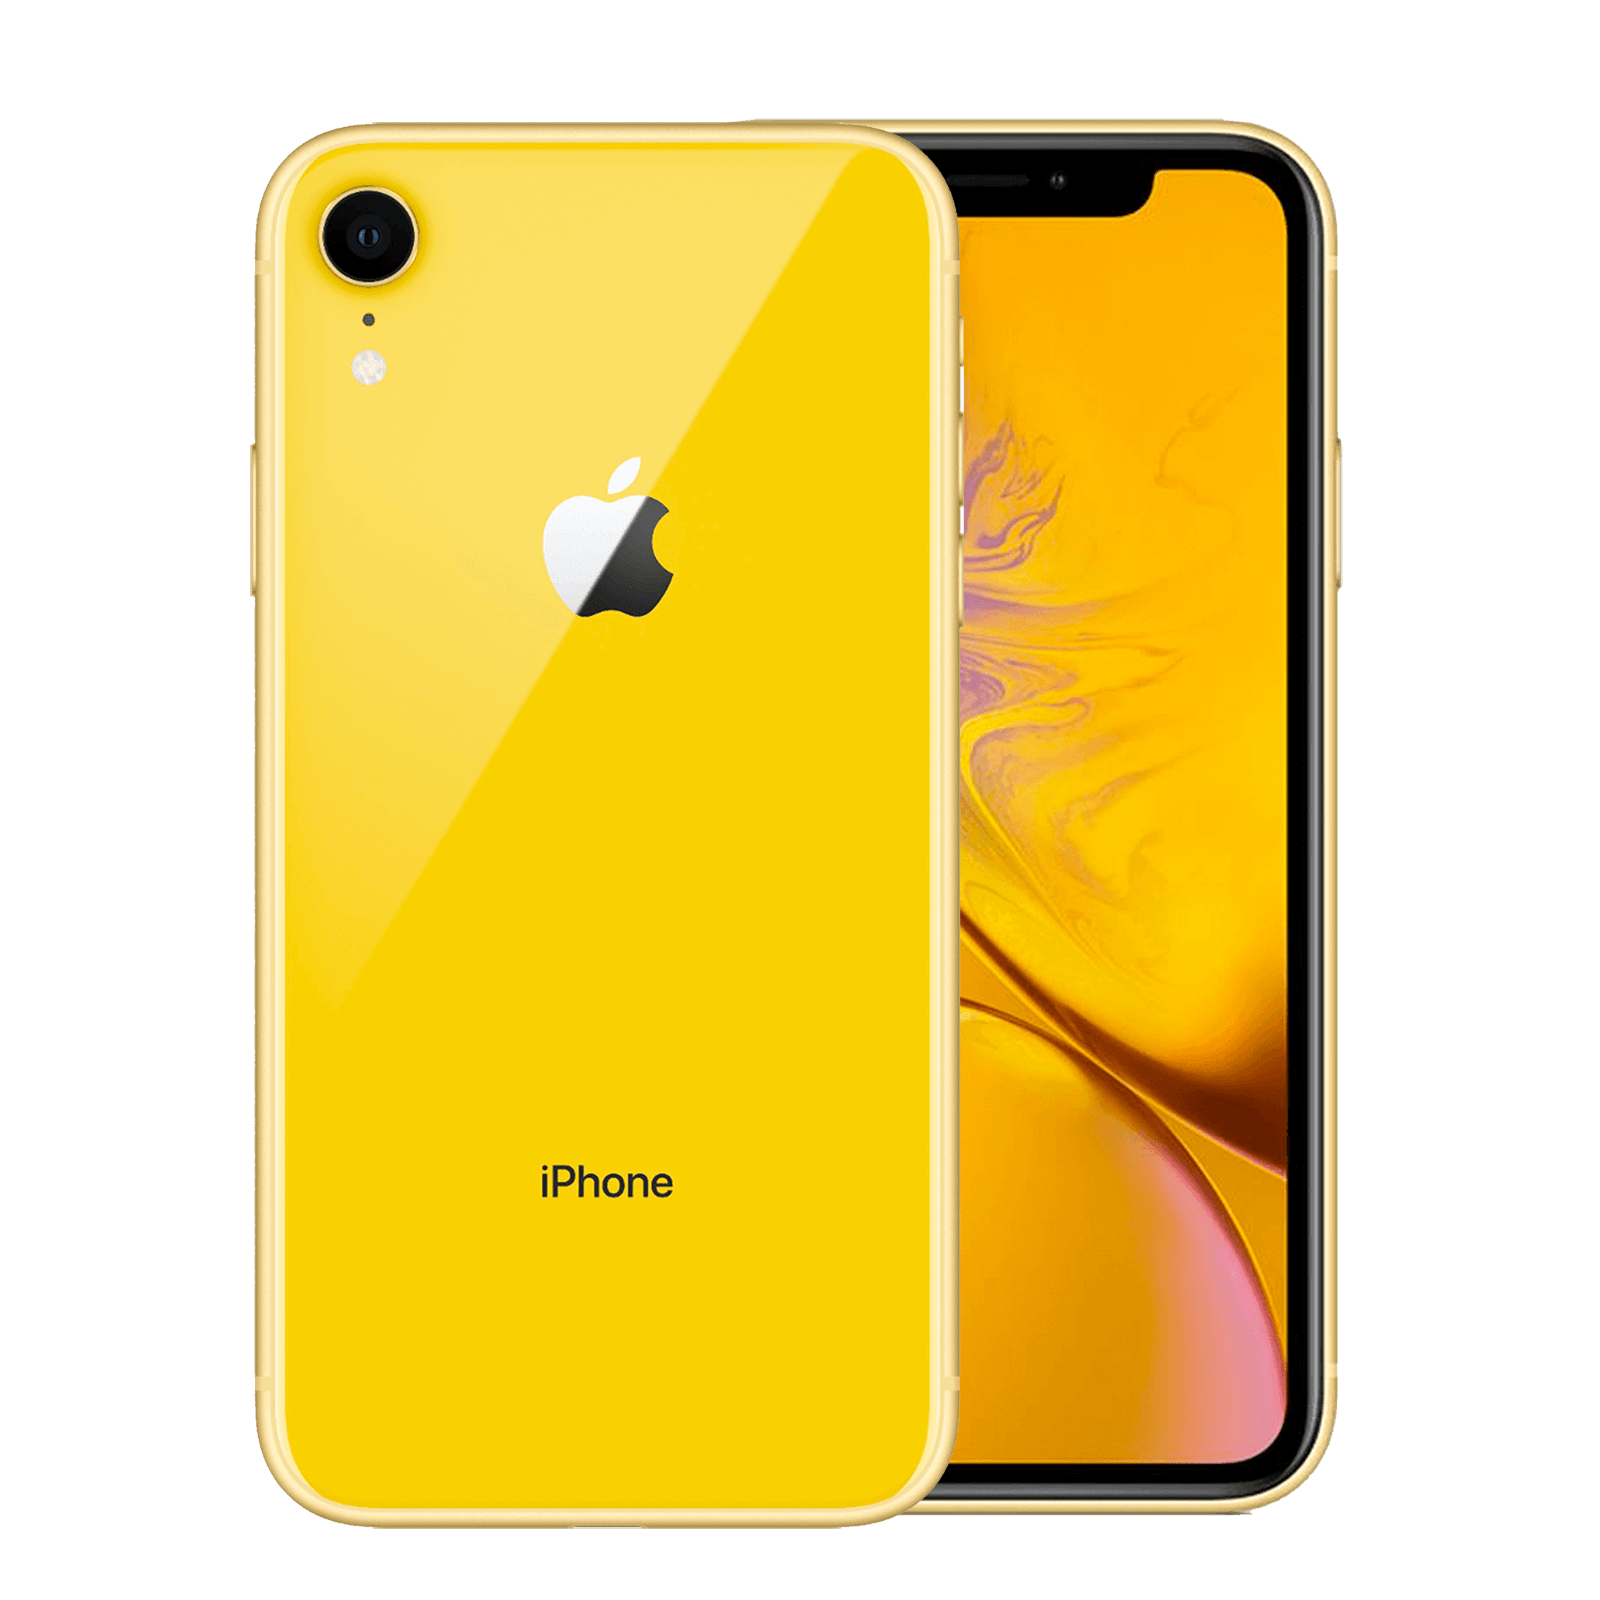 Apple iPhone XR 256GB Yellow Good - Sprint